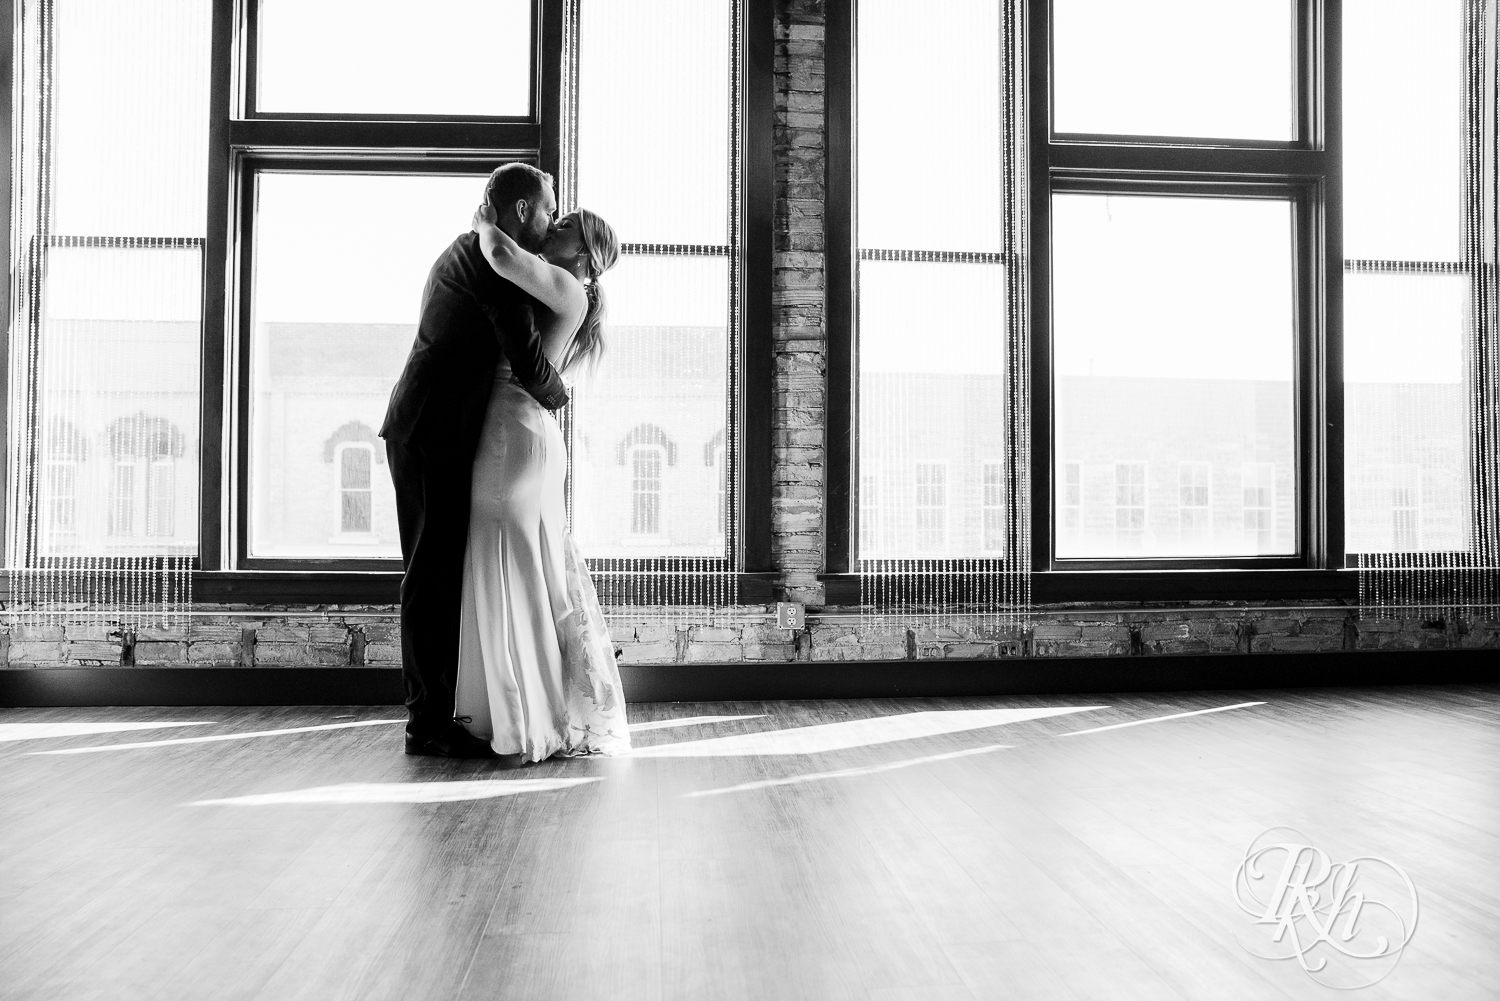 Bride and groom in black suit dance in front of a window in the 3 Ten Event Center in Faribault, Minnesota.